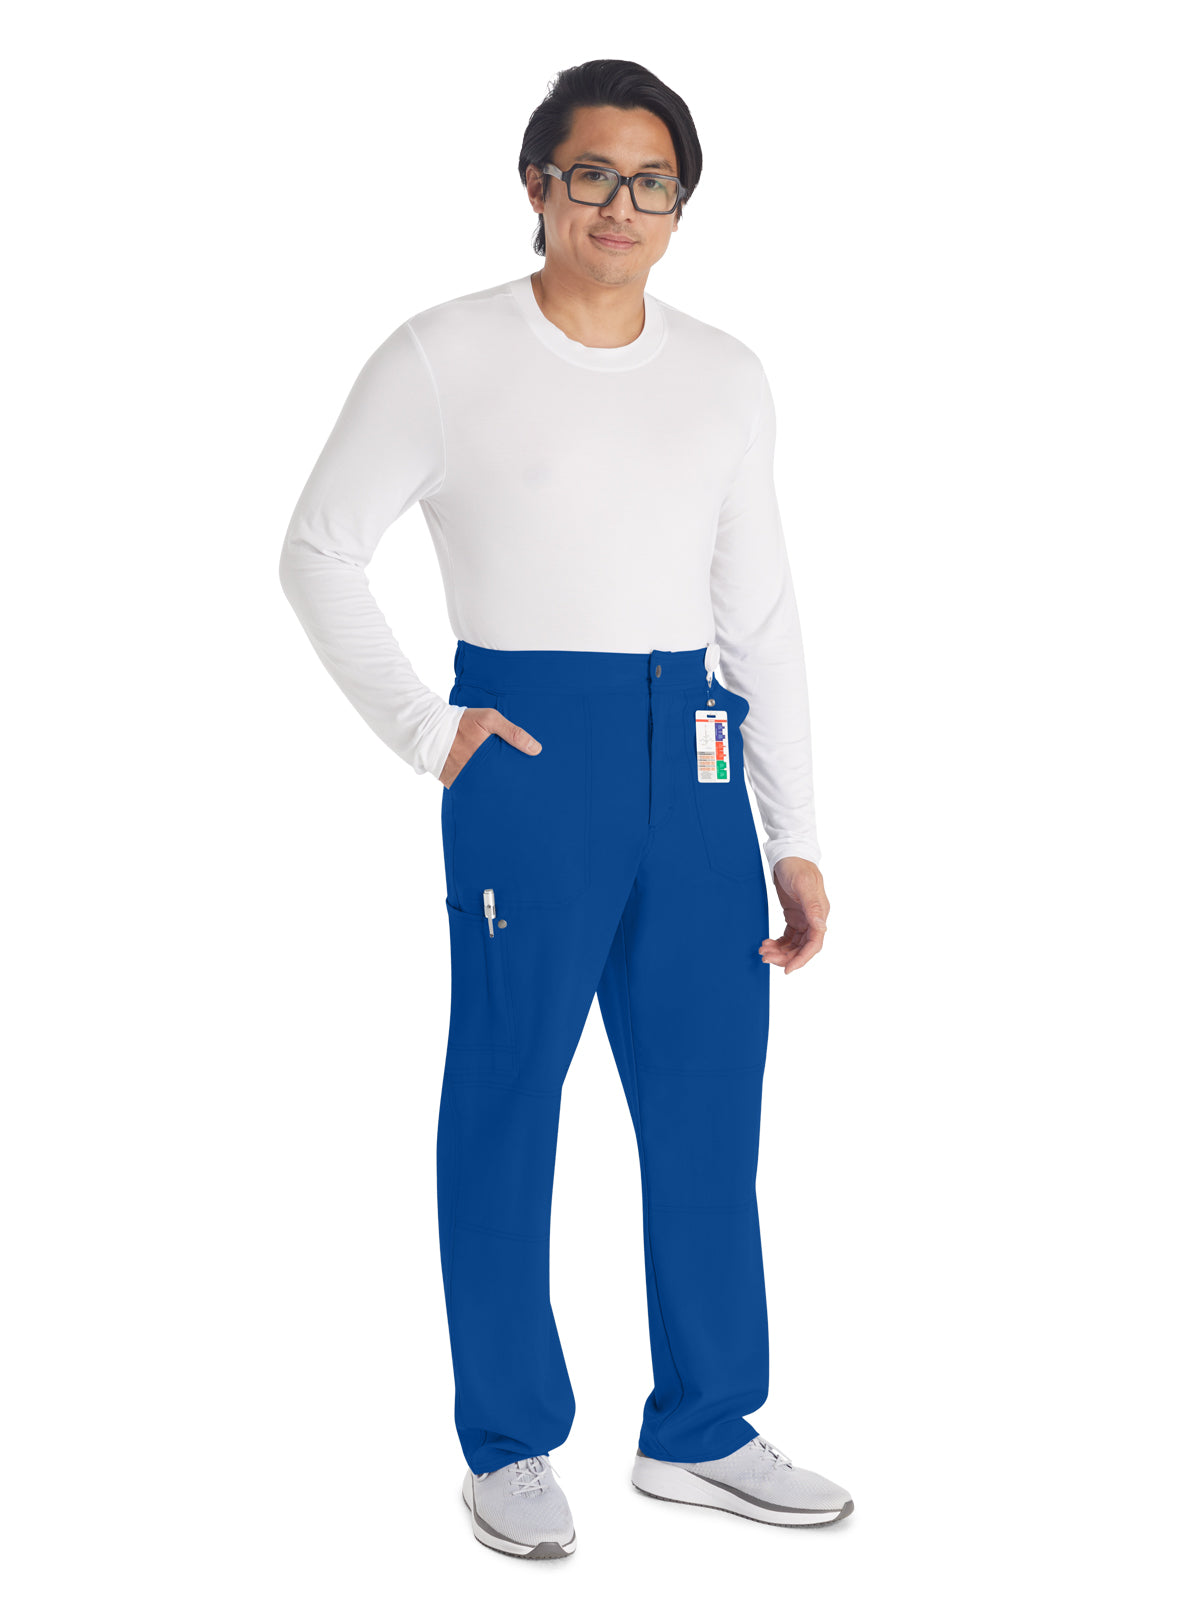 Men's 4-Pocket Zip Fly Scrub Pant - DK216 - Galaxy Blue